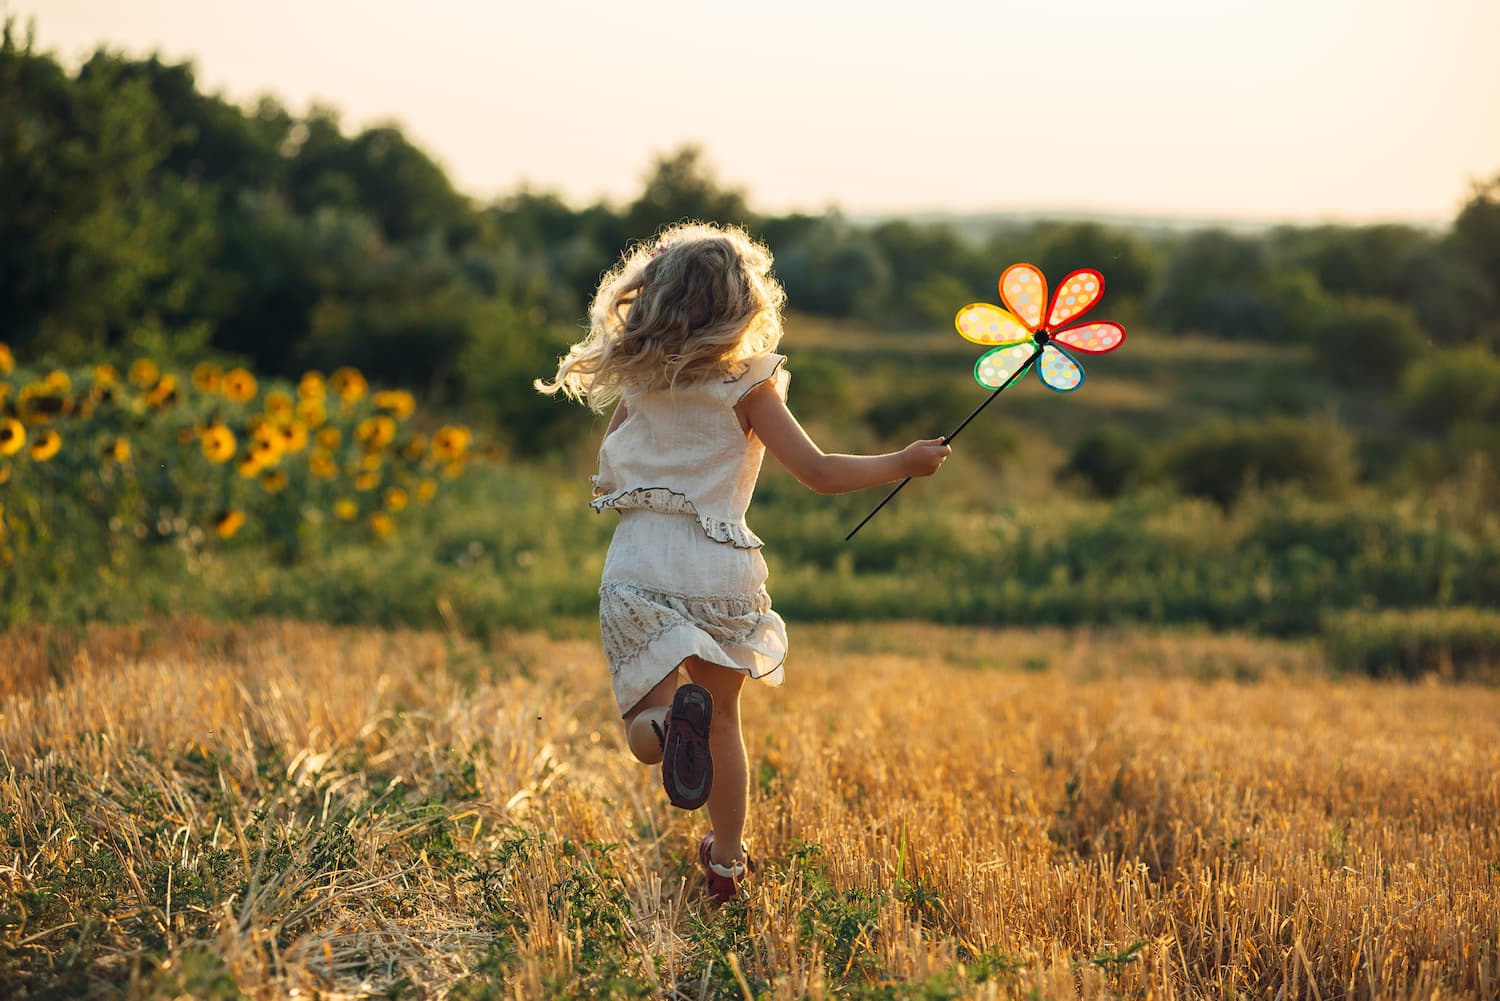 A girl running through a field on a summer's evening holding a toy windmill